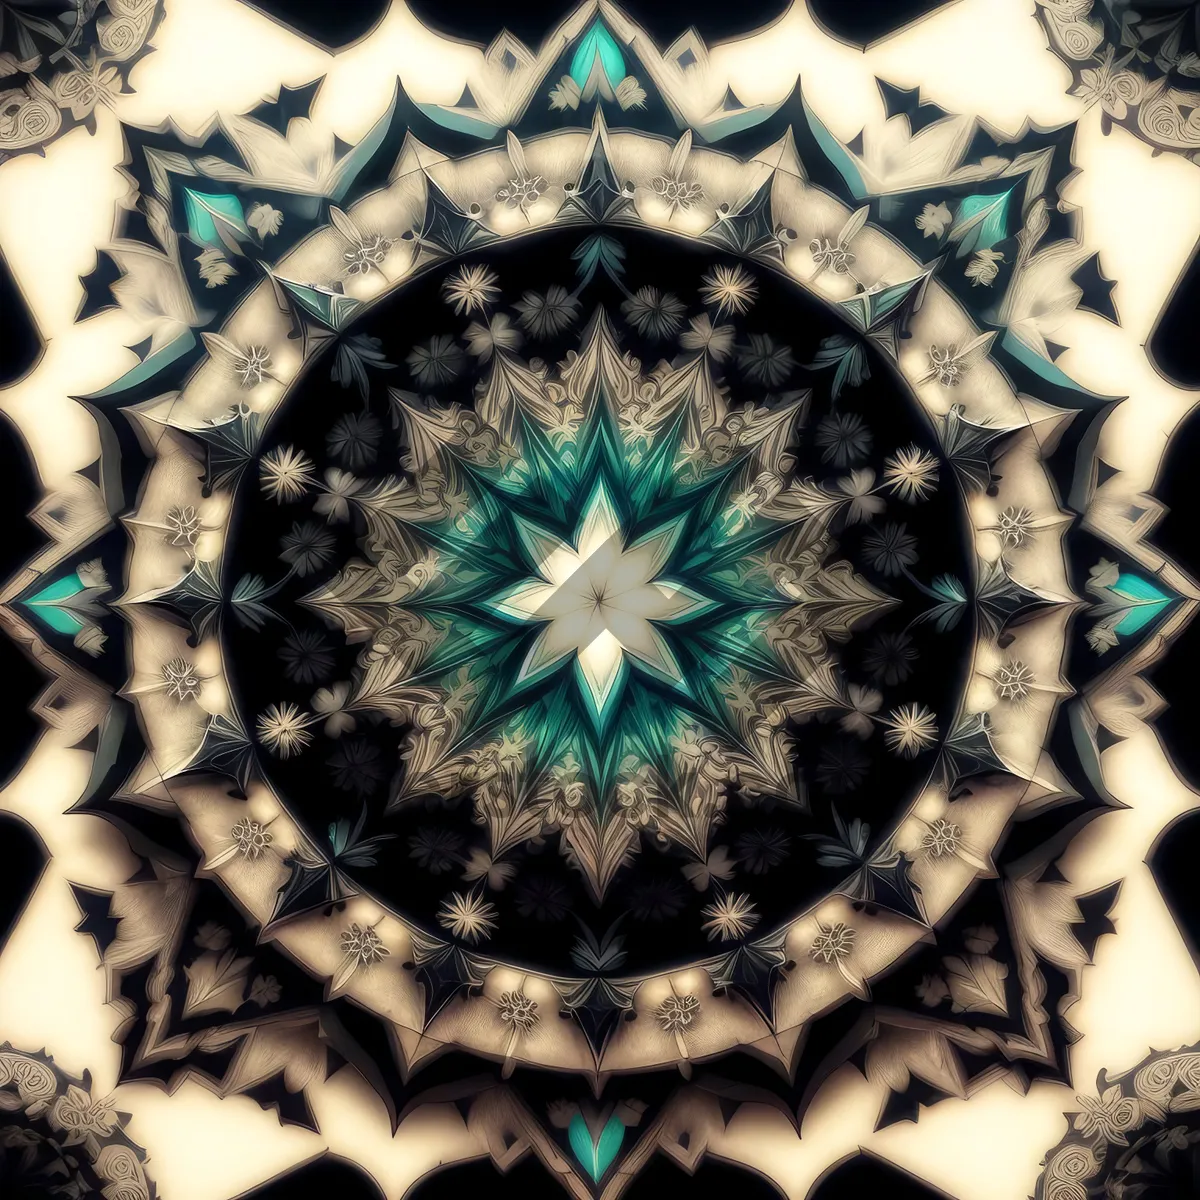 Picture of Vibrant Arabesque Mosaic: A Kaleidoscope of Artistic Geometric Symmetry